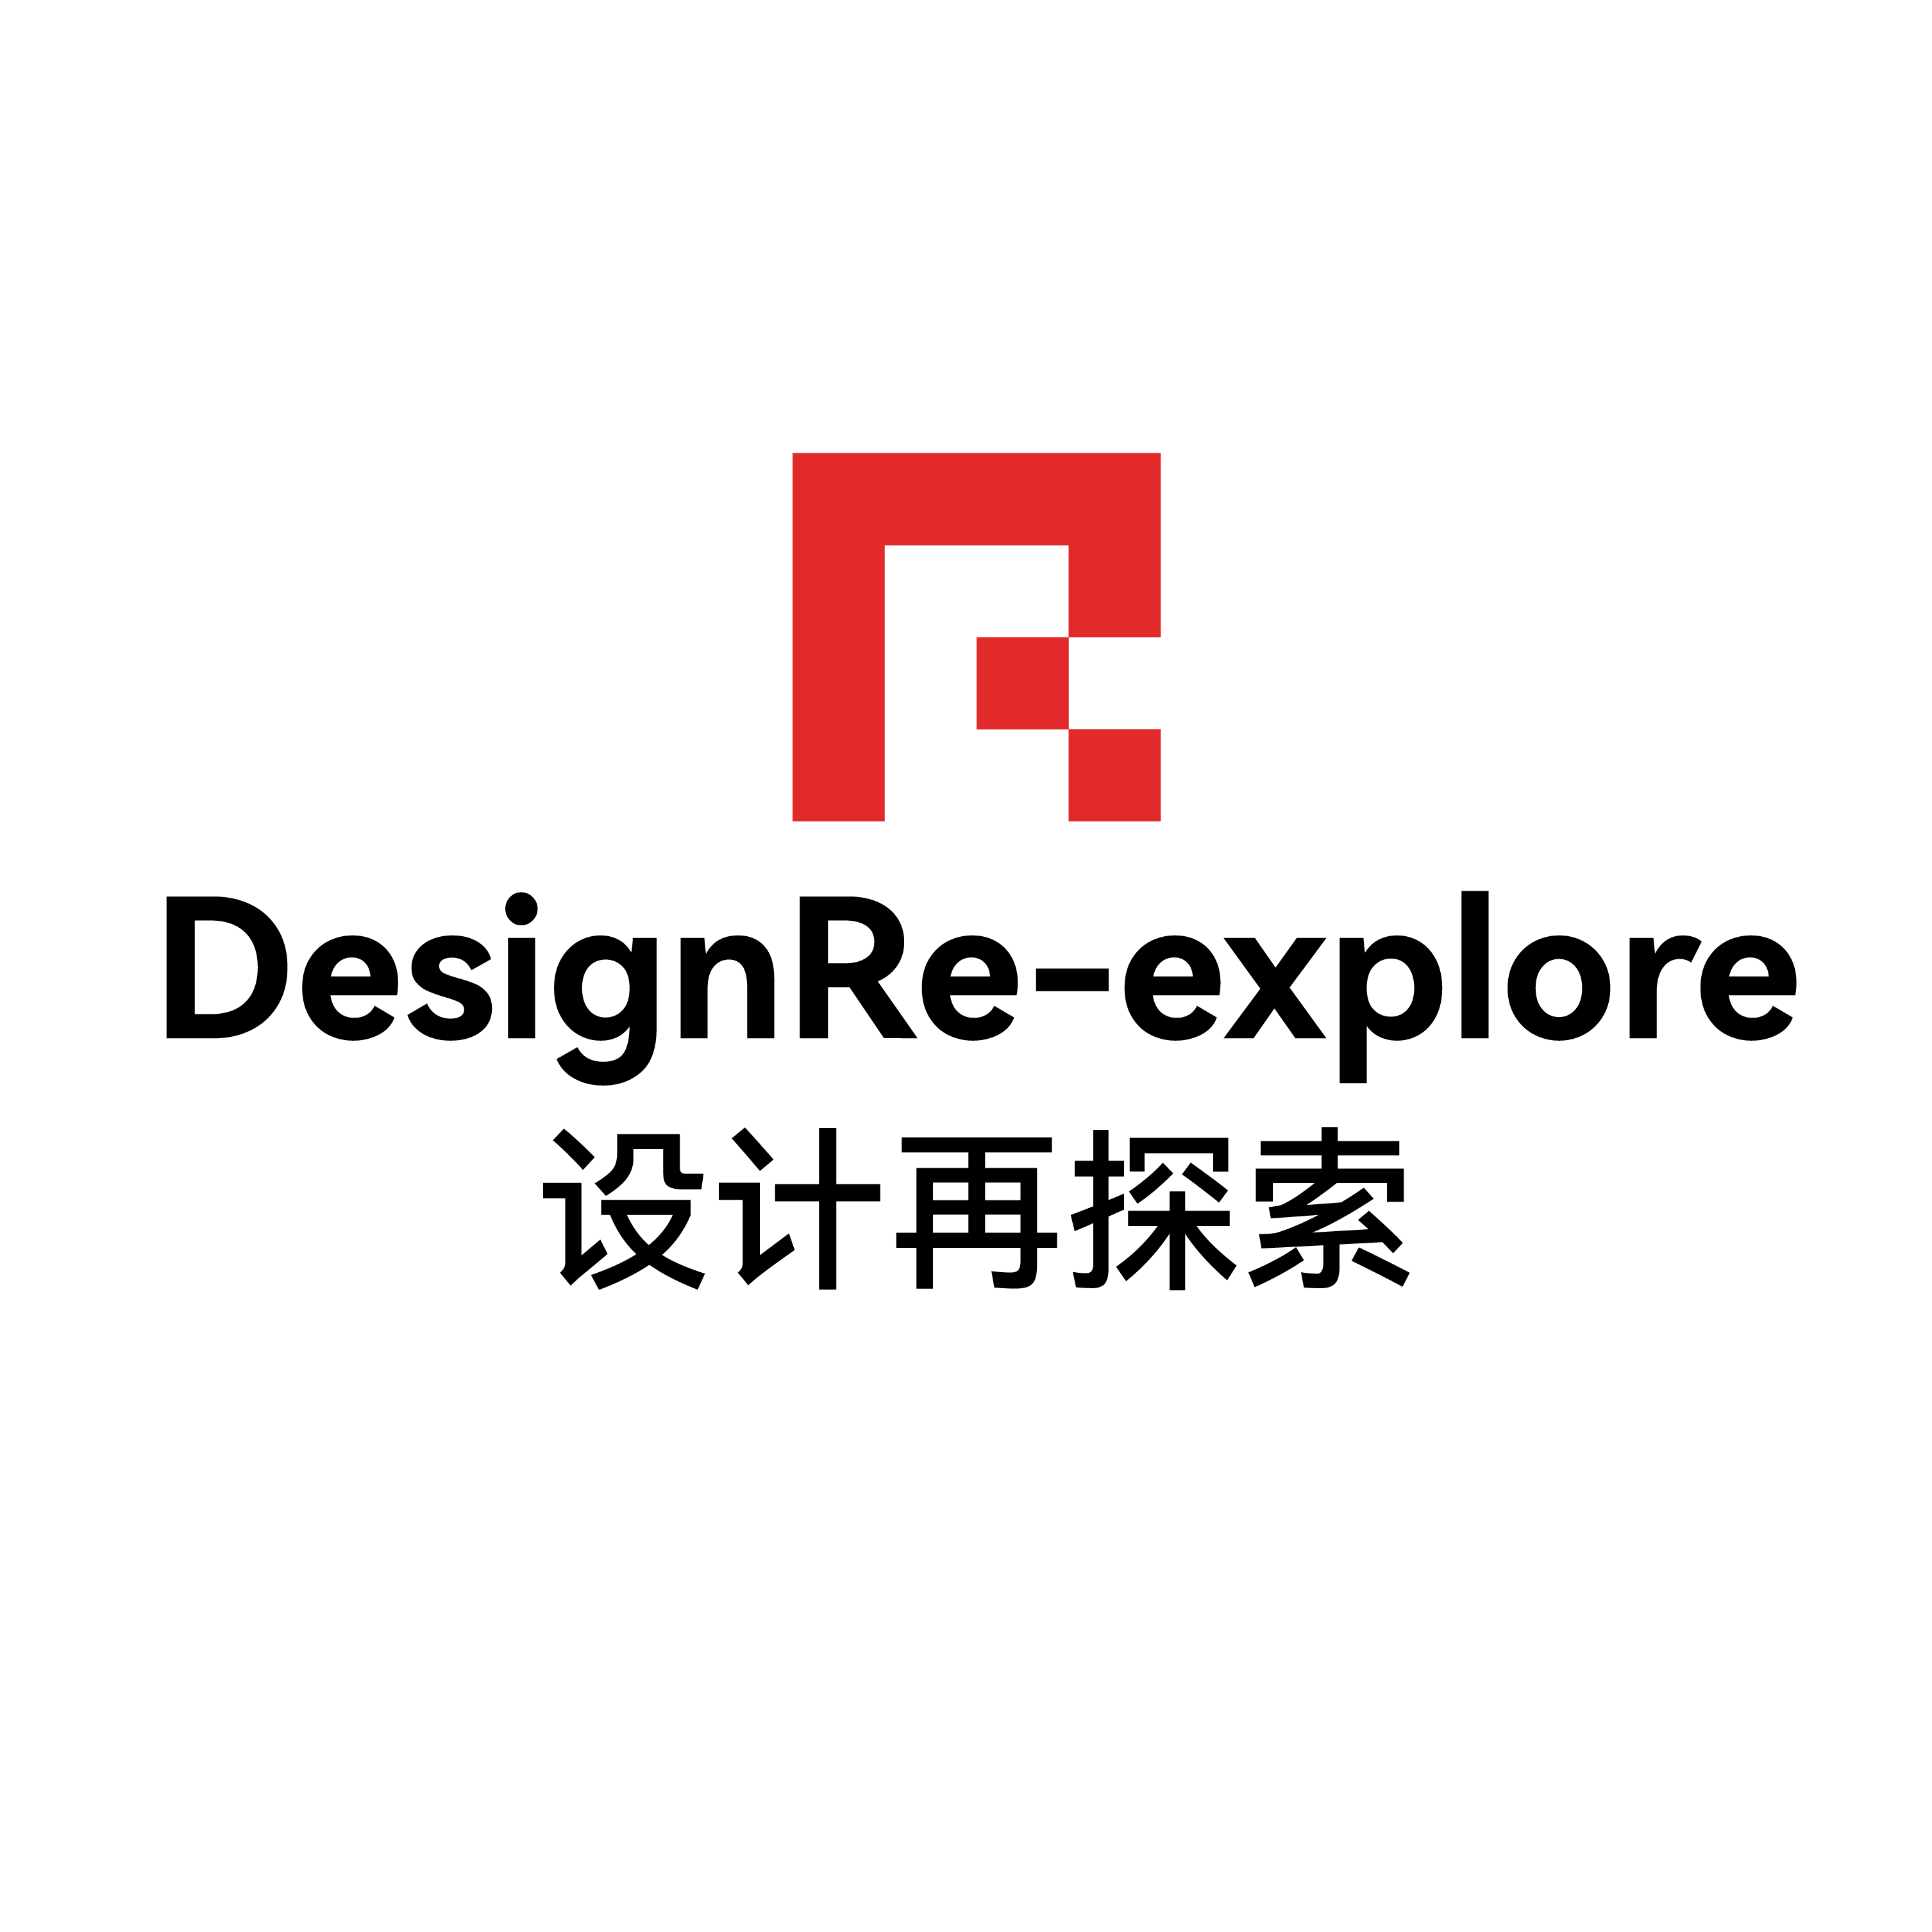 Design Re-explore logo transparent